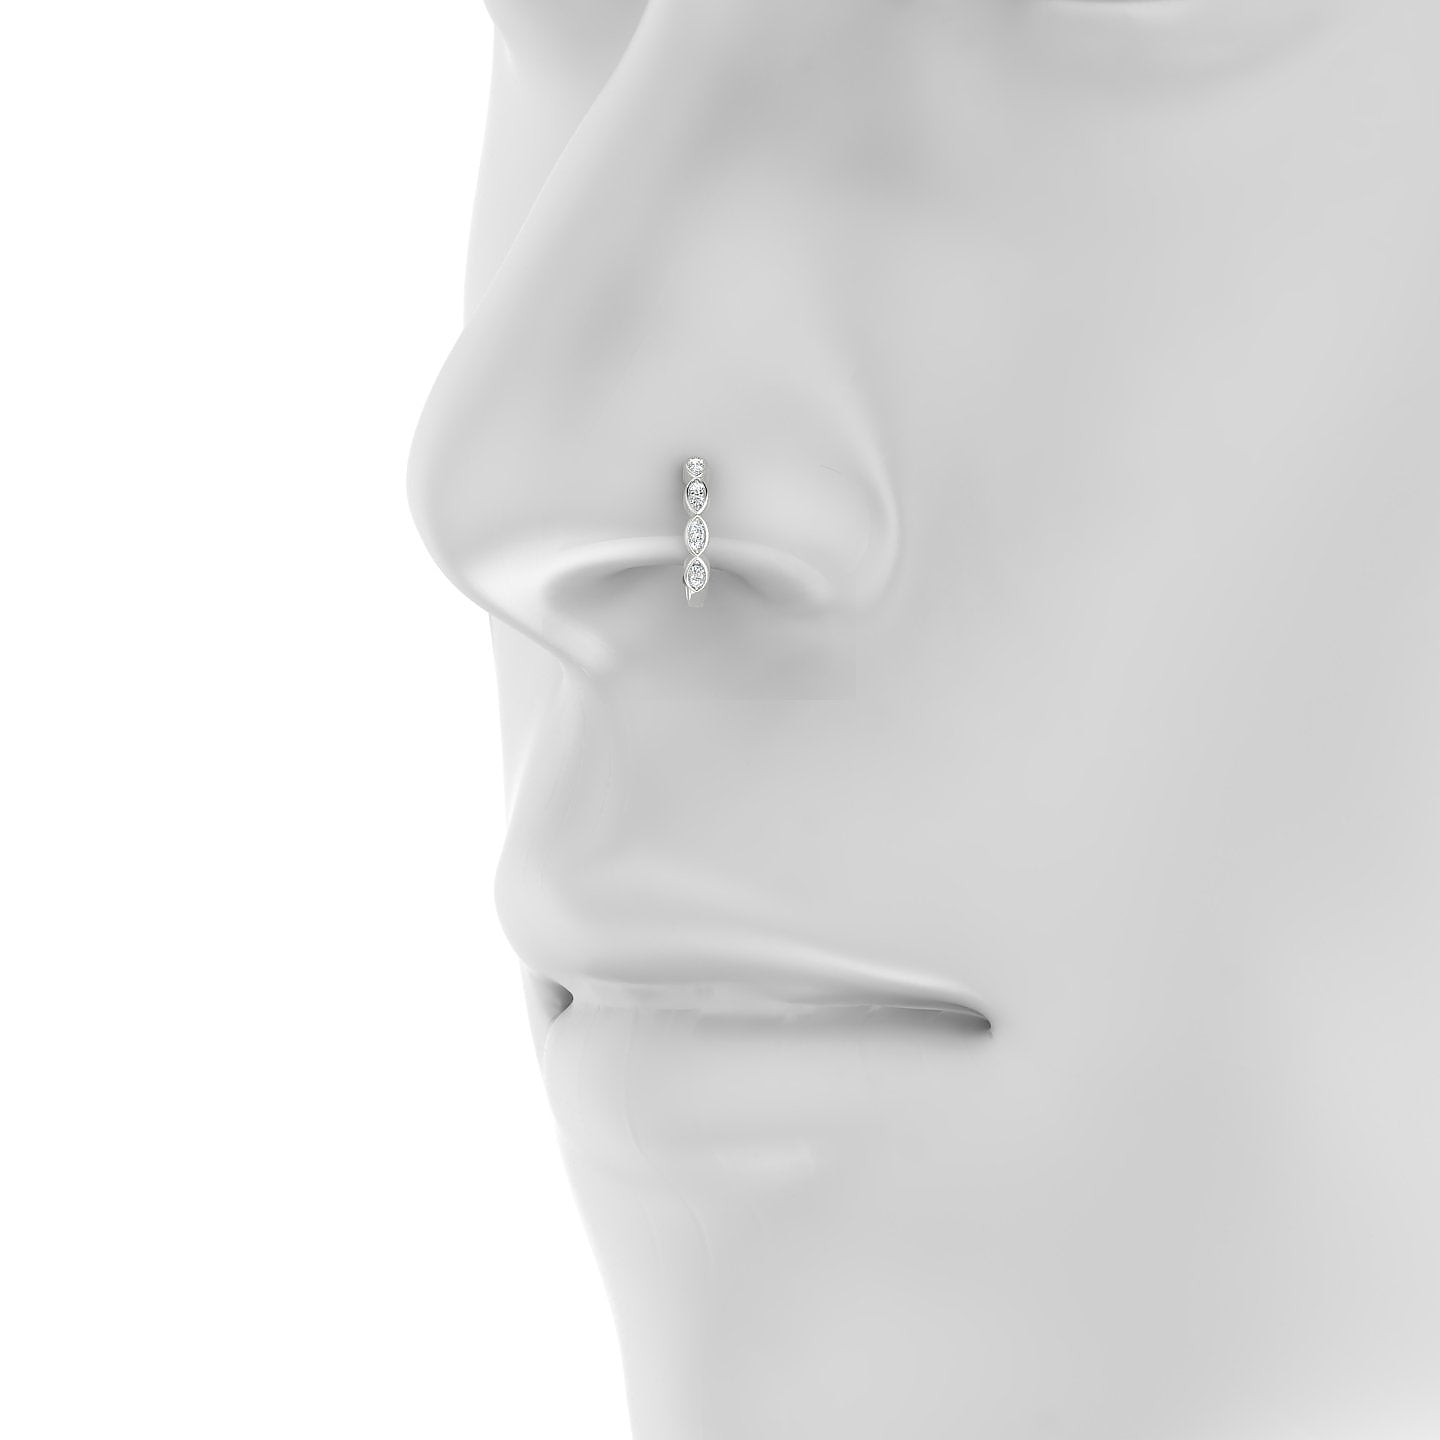 Hathor | 18k White Gold 9.5 mm Diamond Nose Ring Piercing